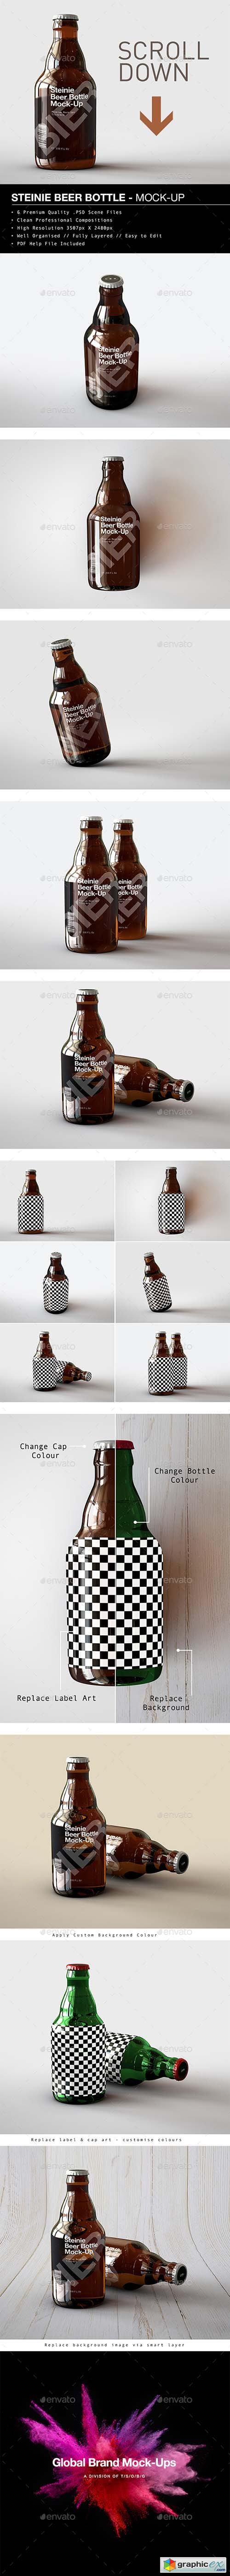 Beer Bottle Mock-Up | Steinie Edition